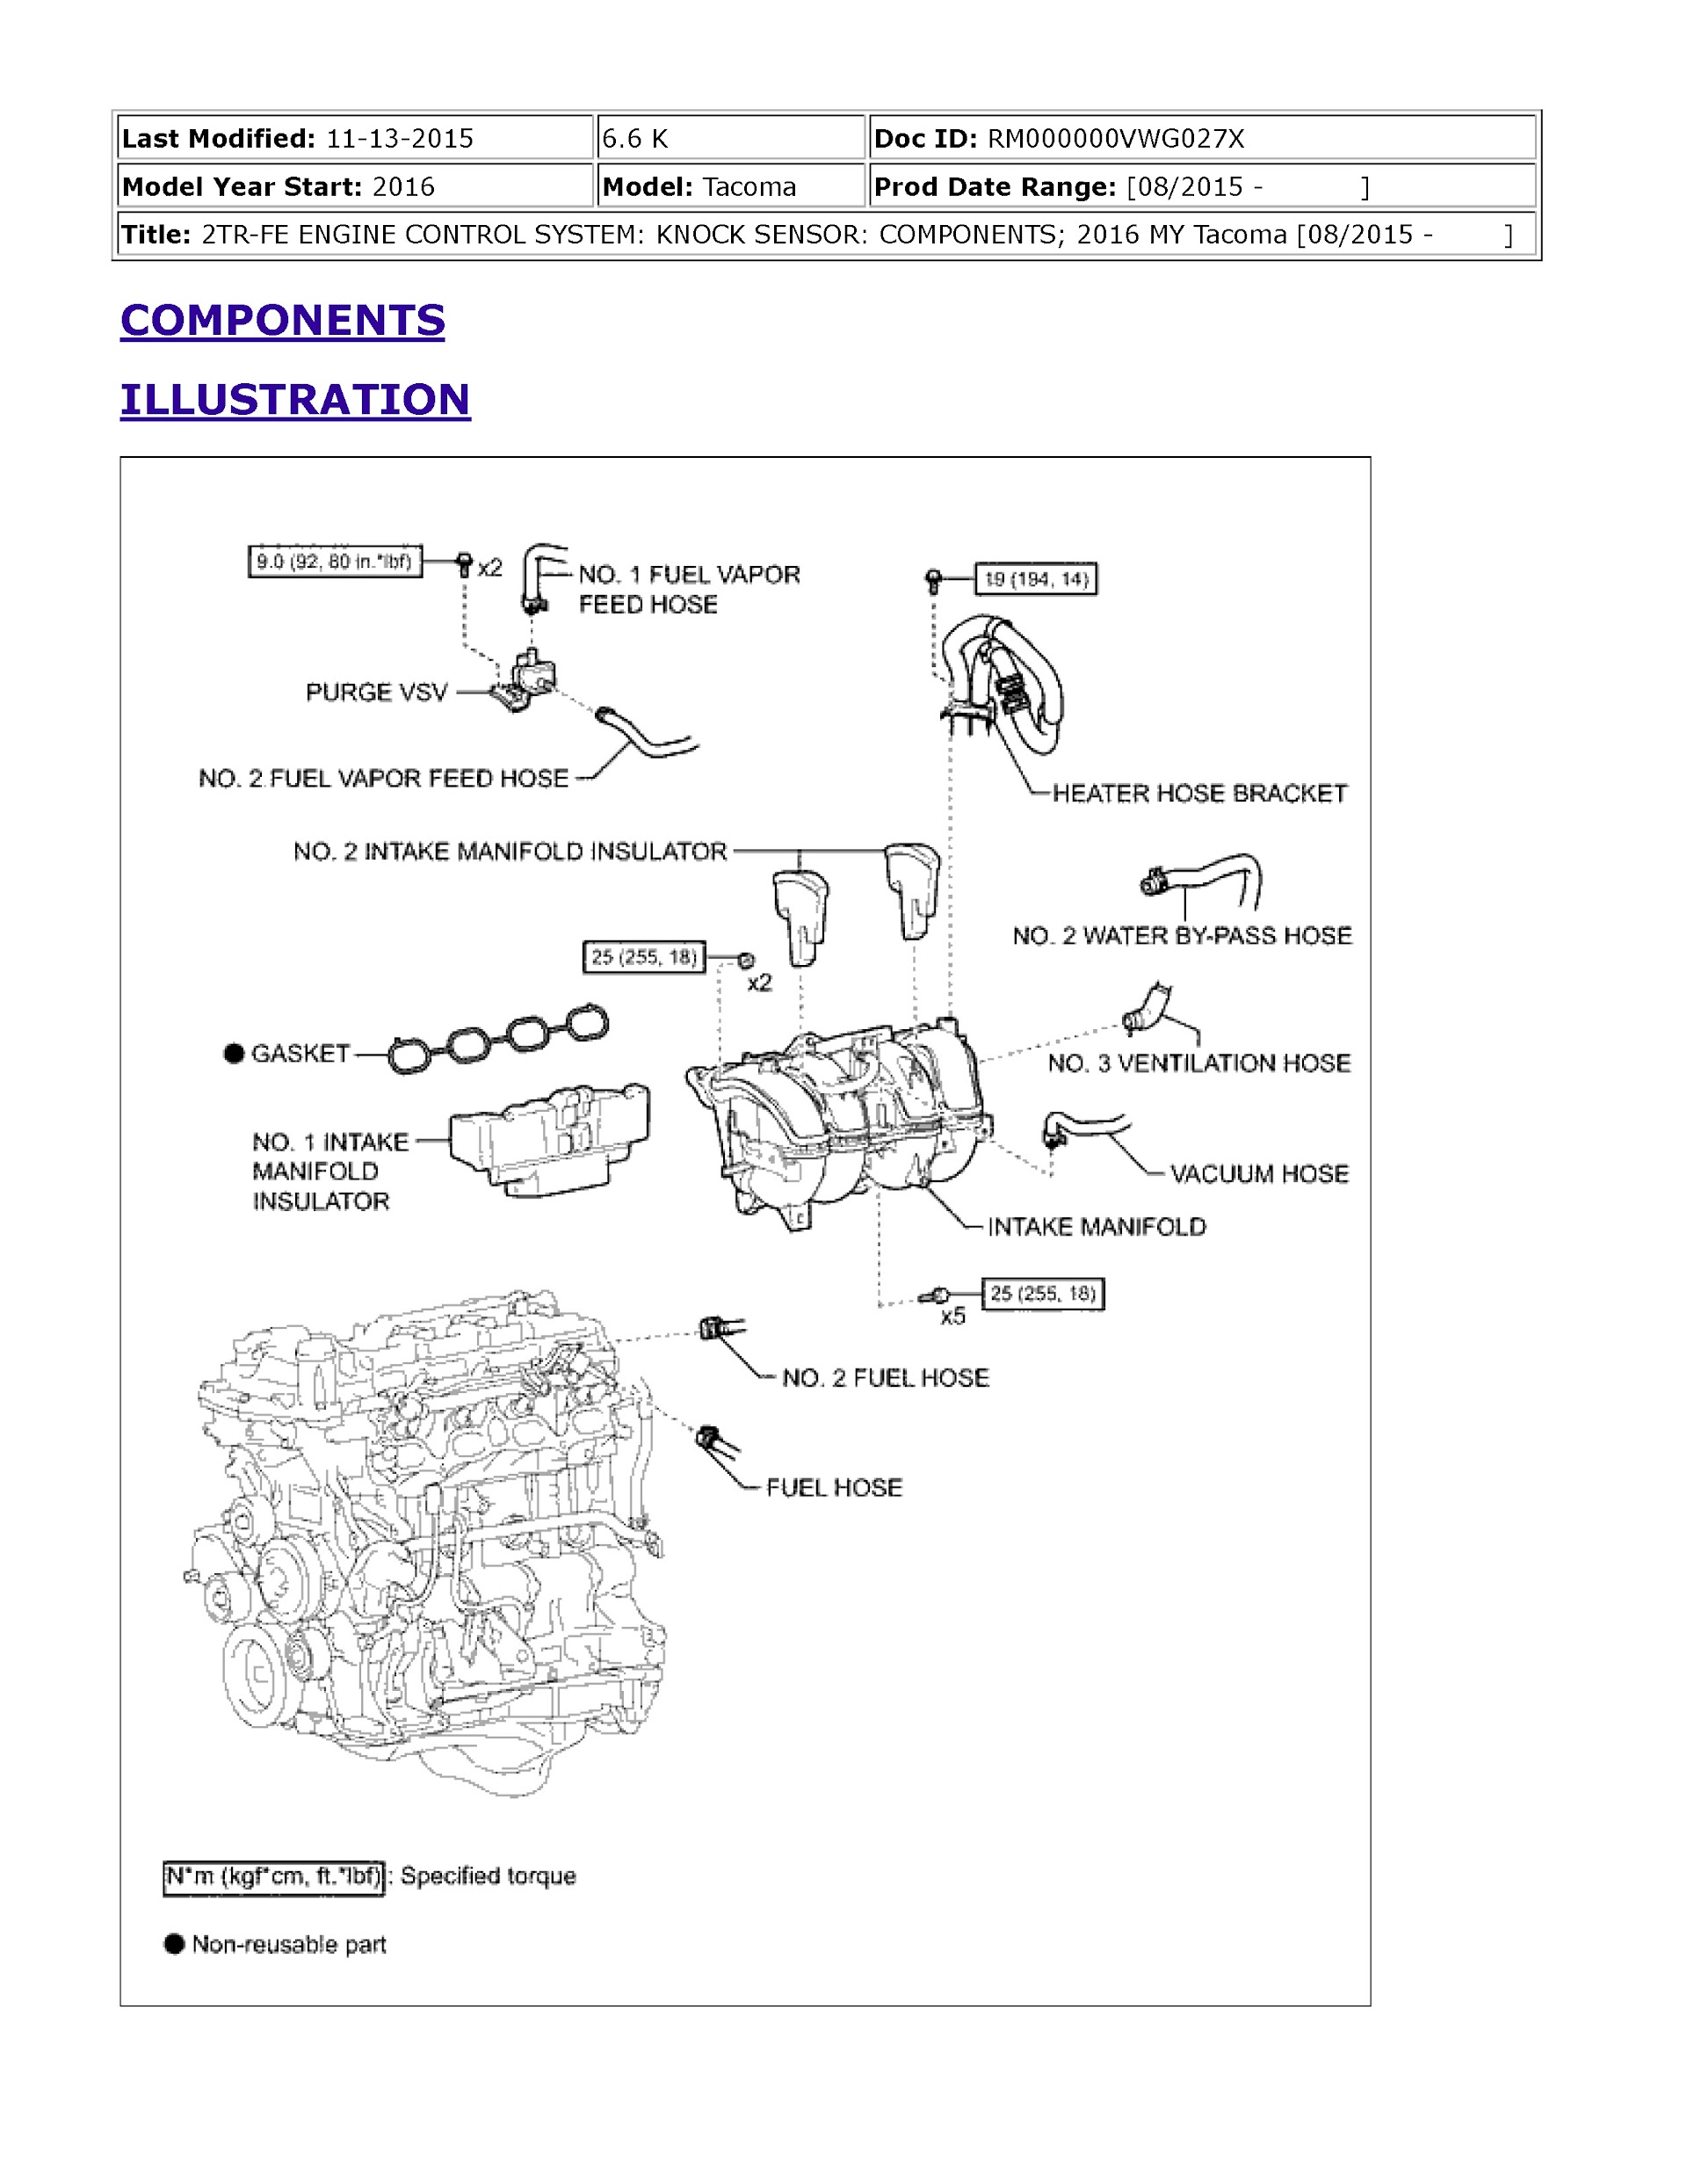 2018 Toyota Tacoma Repair Manual, 2TR-FE Engine Control